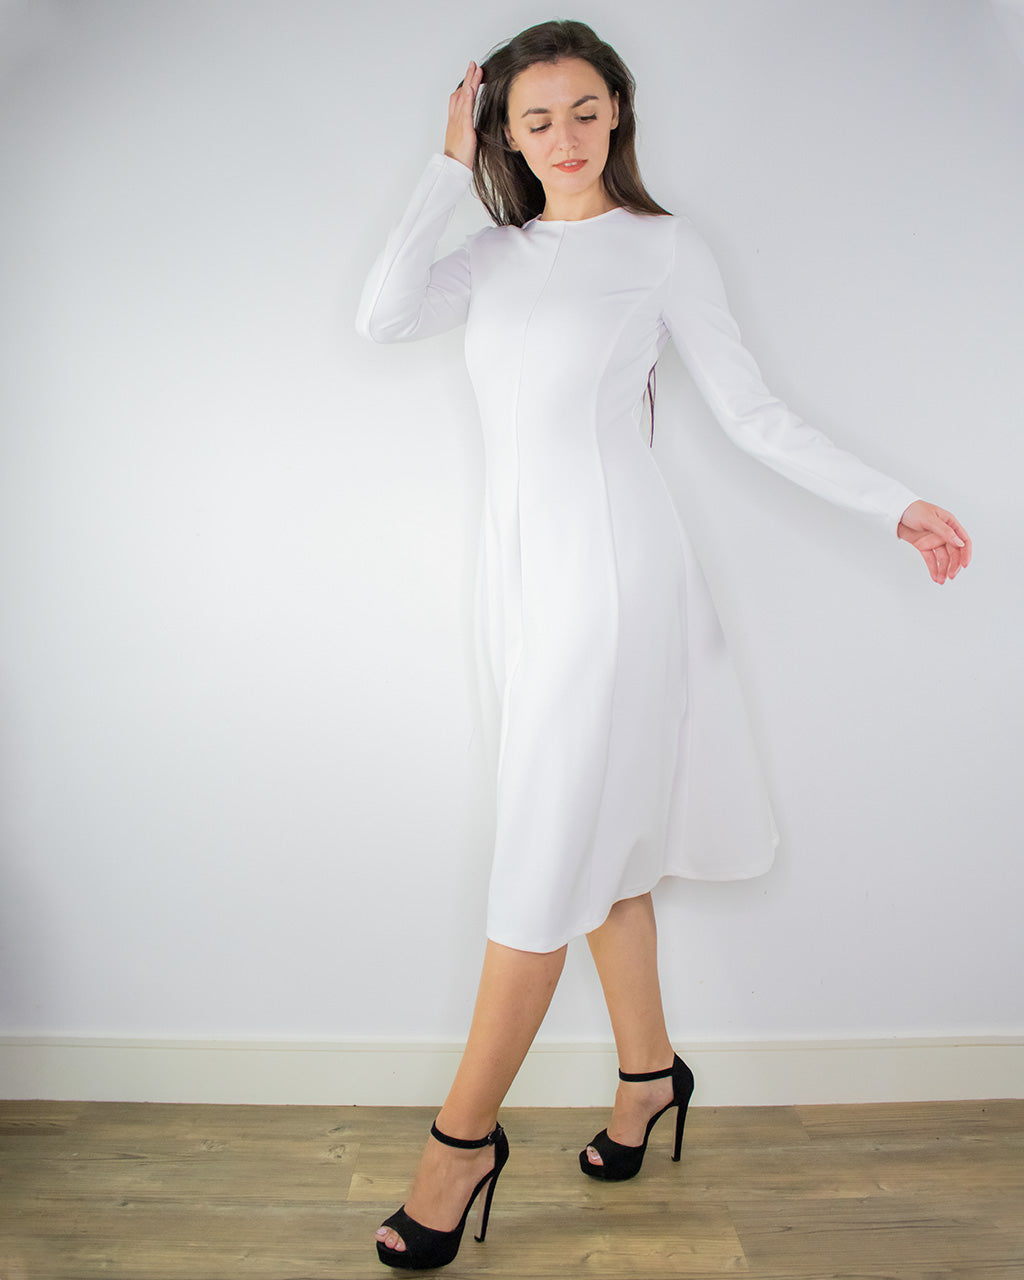 Nora White Midi Dress with Sleeves - White Skater Dress